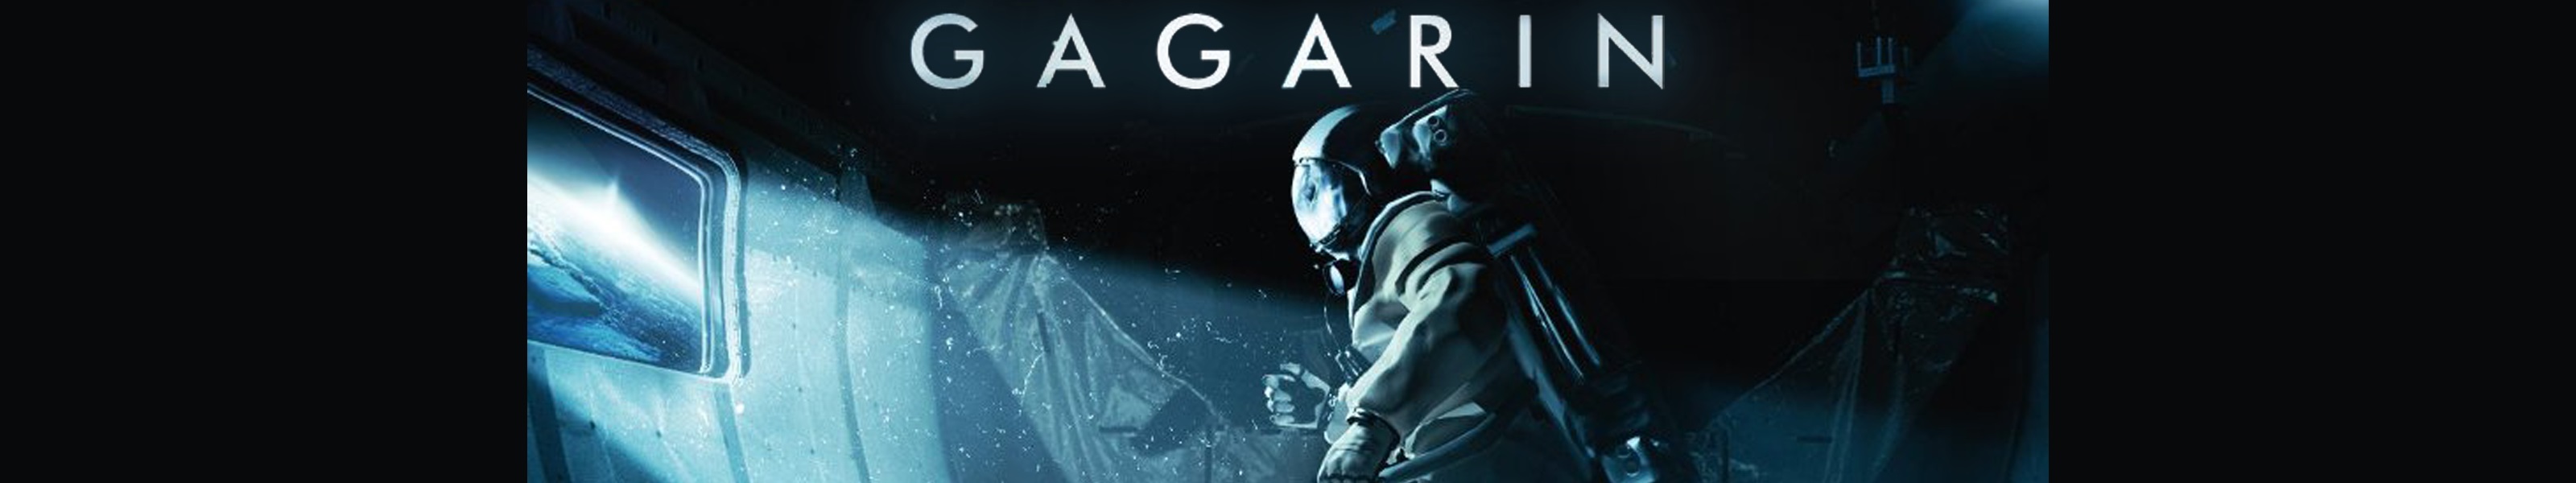 Gagarin: Pervyy v kosmose / Gagarin: First in Space